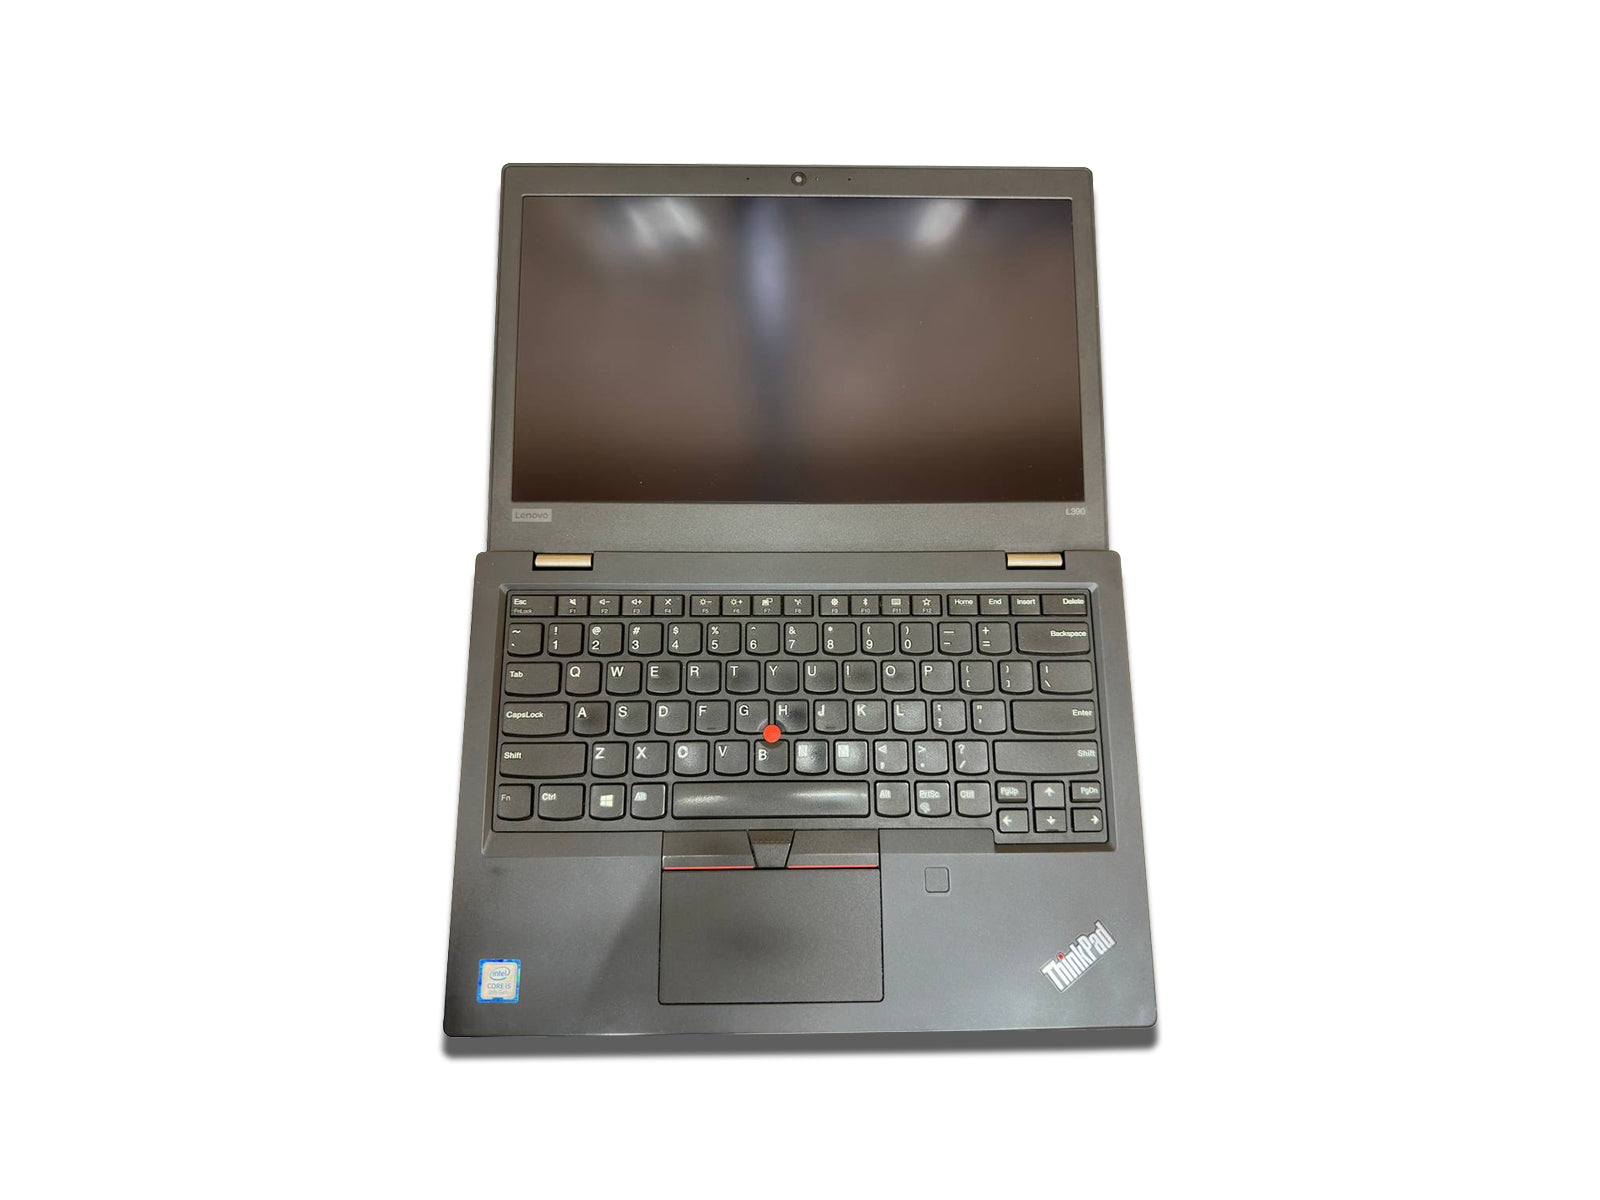 Birdseye View of The Lenovo L390 Laptop on The White Background